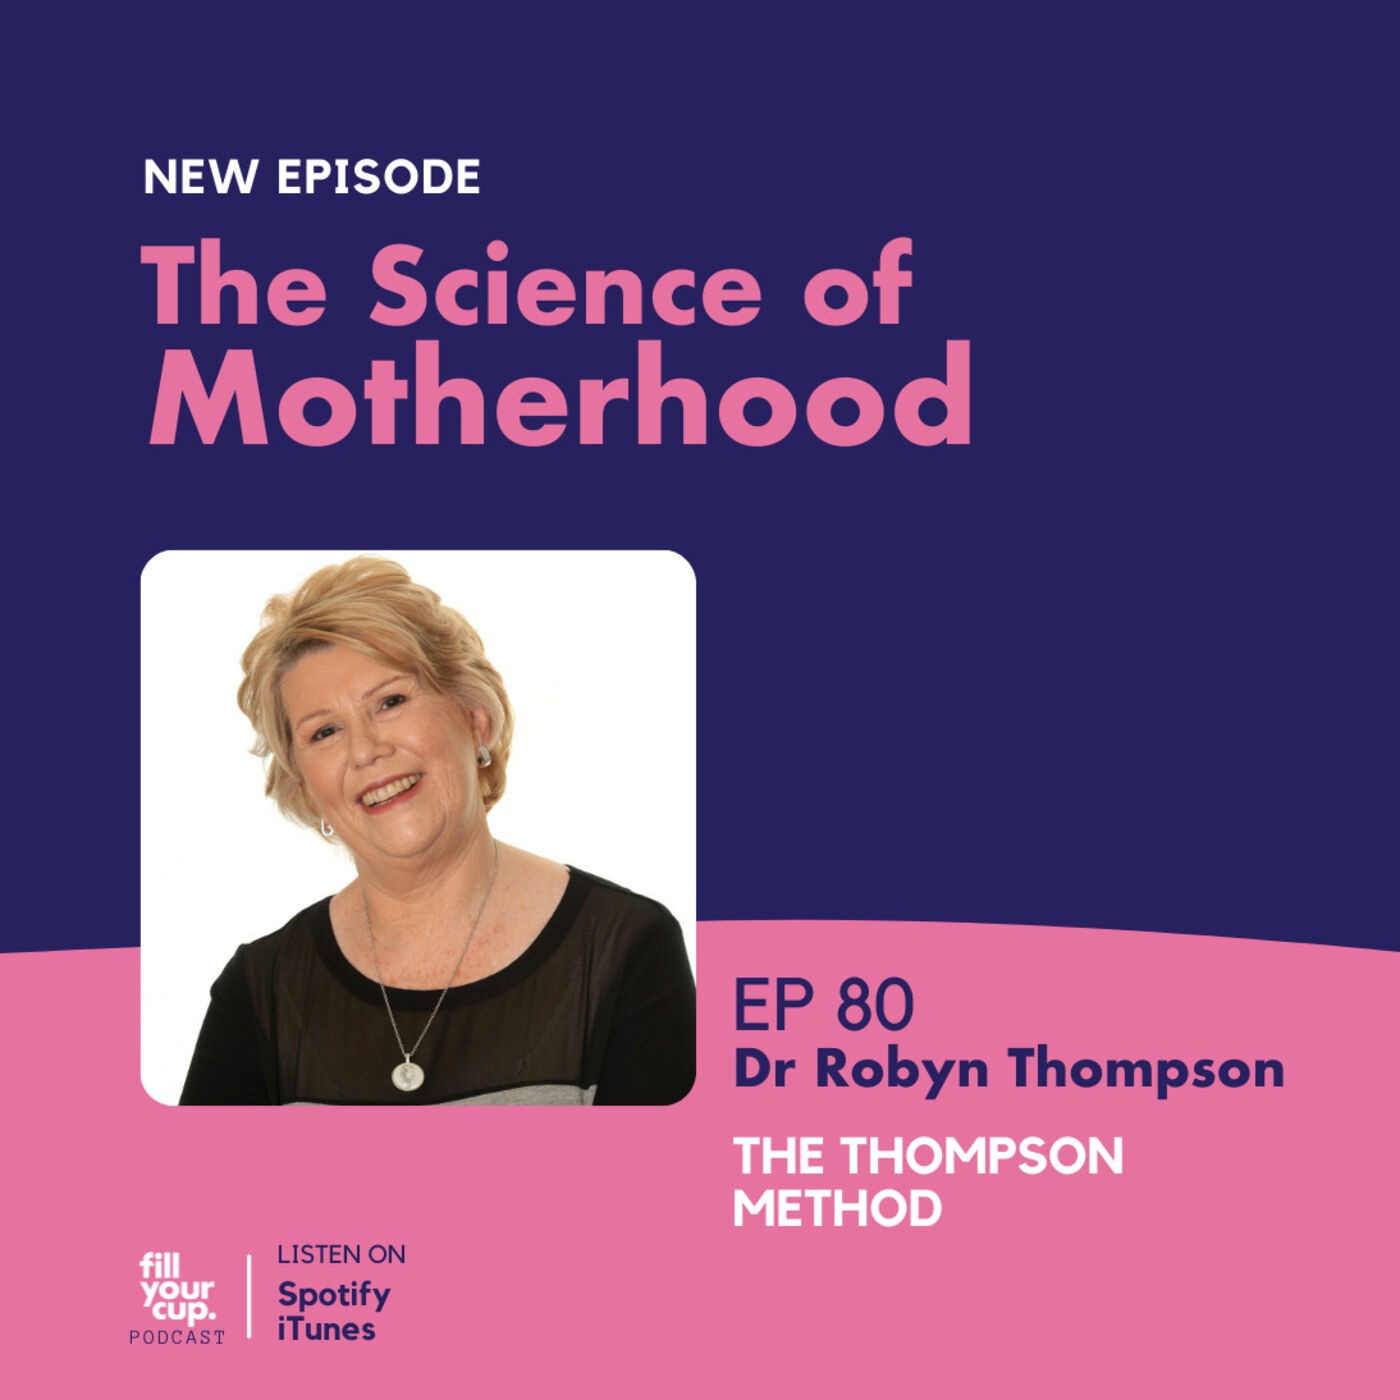 Ep 80. Dr Robyn Thompson - The Thompson Method